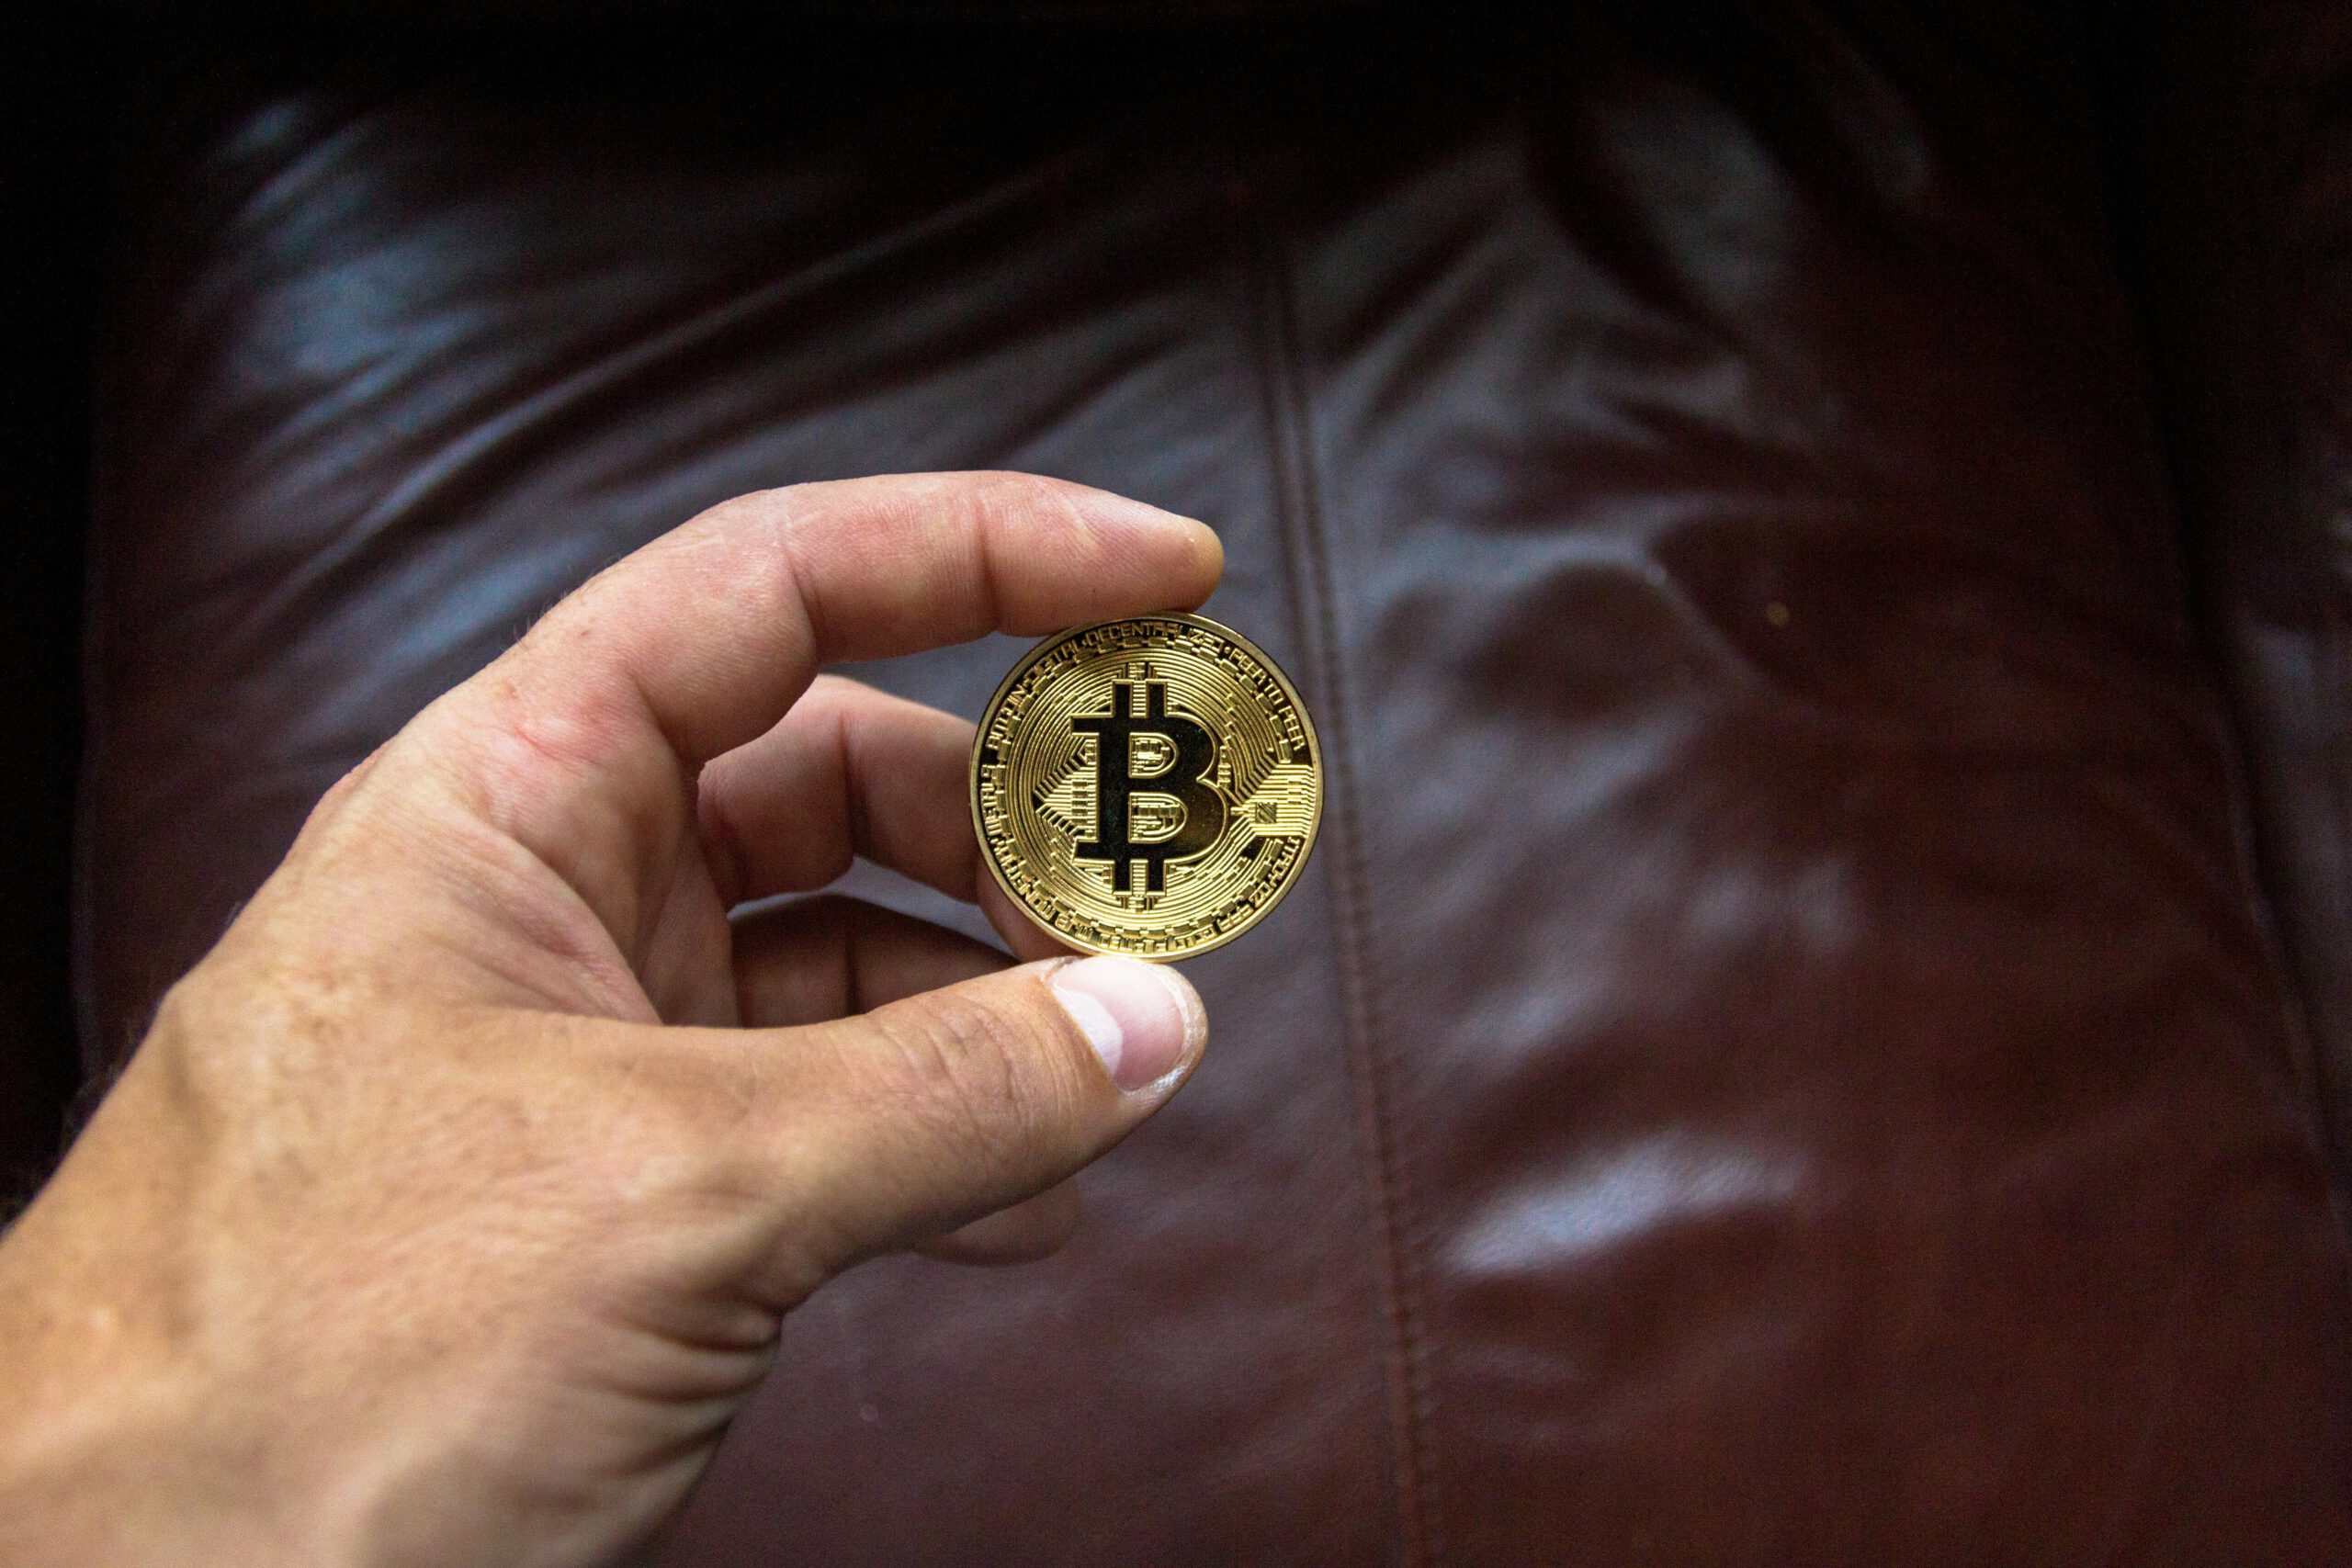 Bitcoin in hands